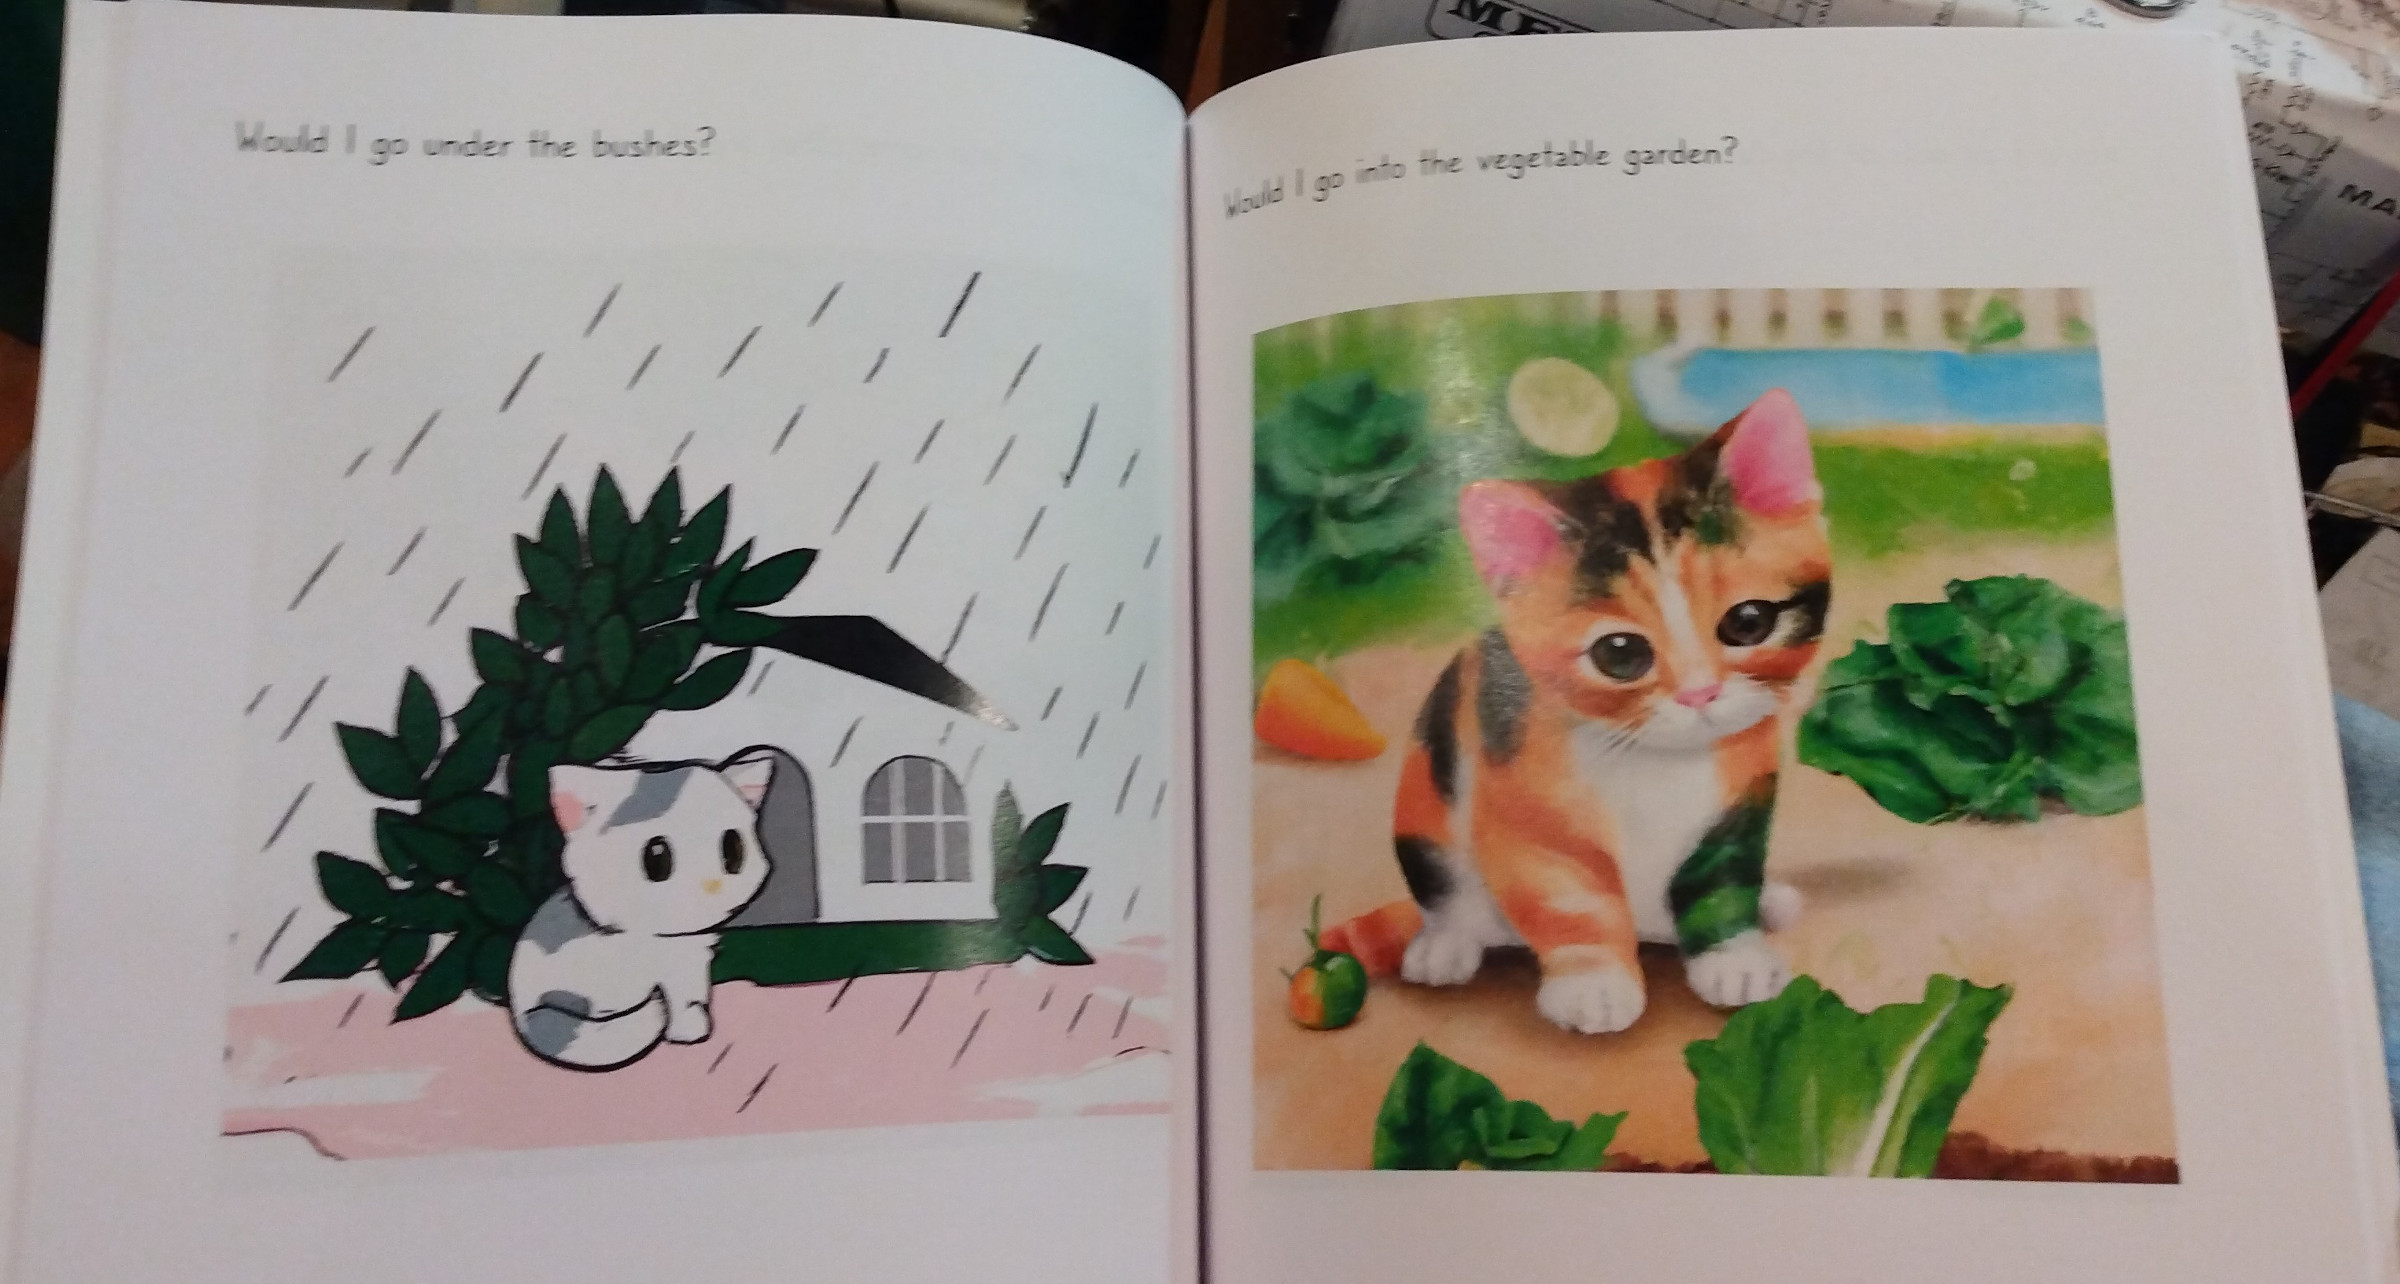 Inside of book - cute kitties.